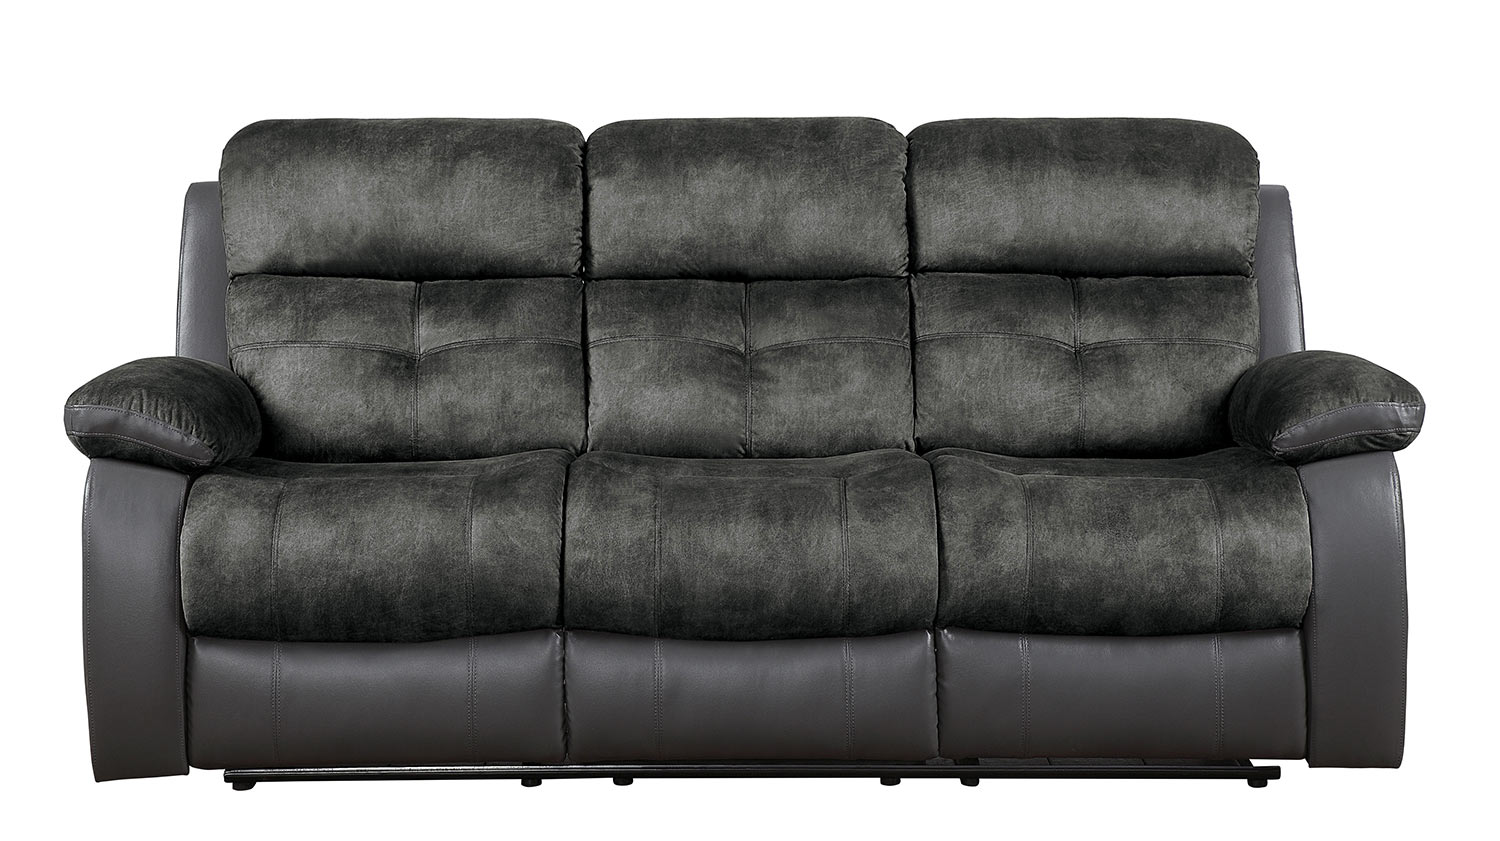 Homelegance Acadia Double Reclining Sofa - Gray microfiber and bi-cast vinyl